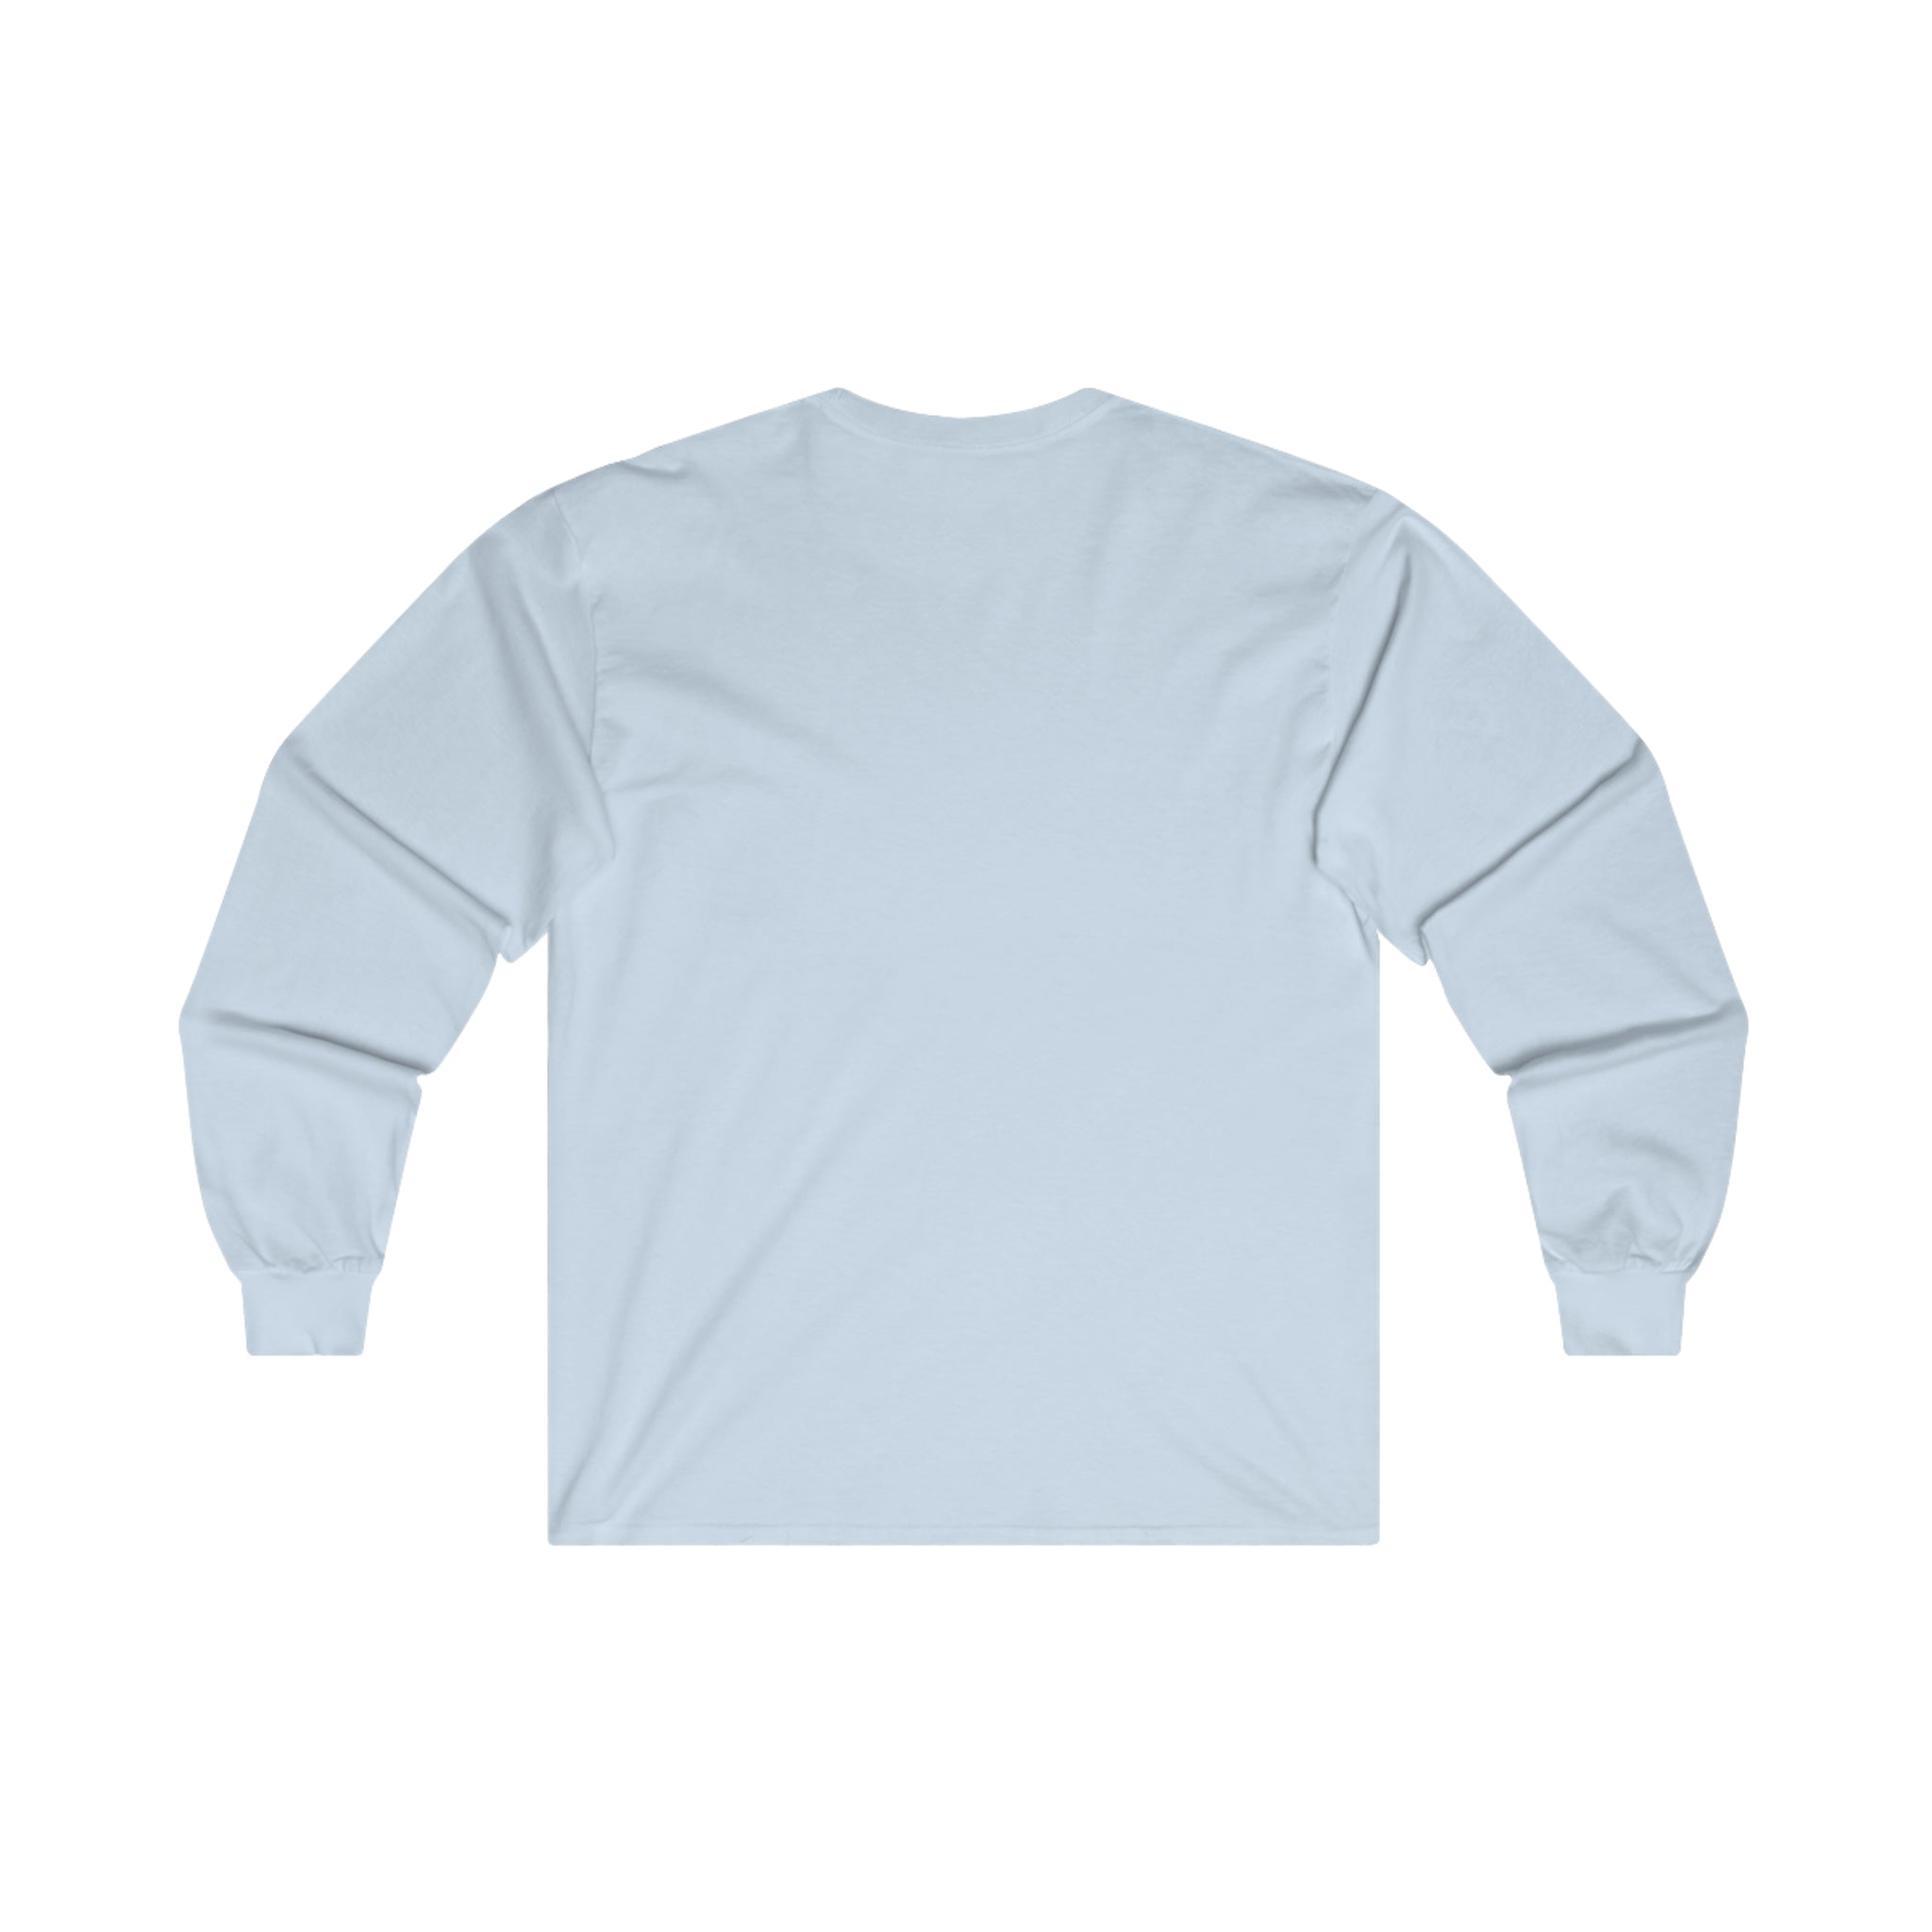 PPYQ® Original Long Sleeve (White)